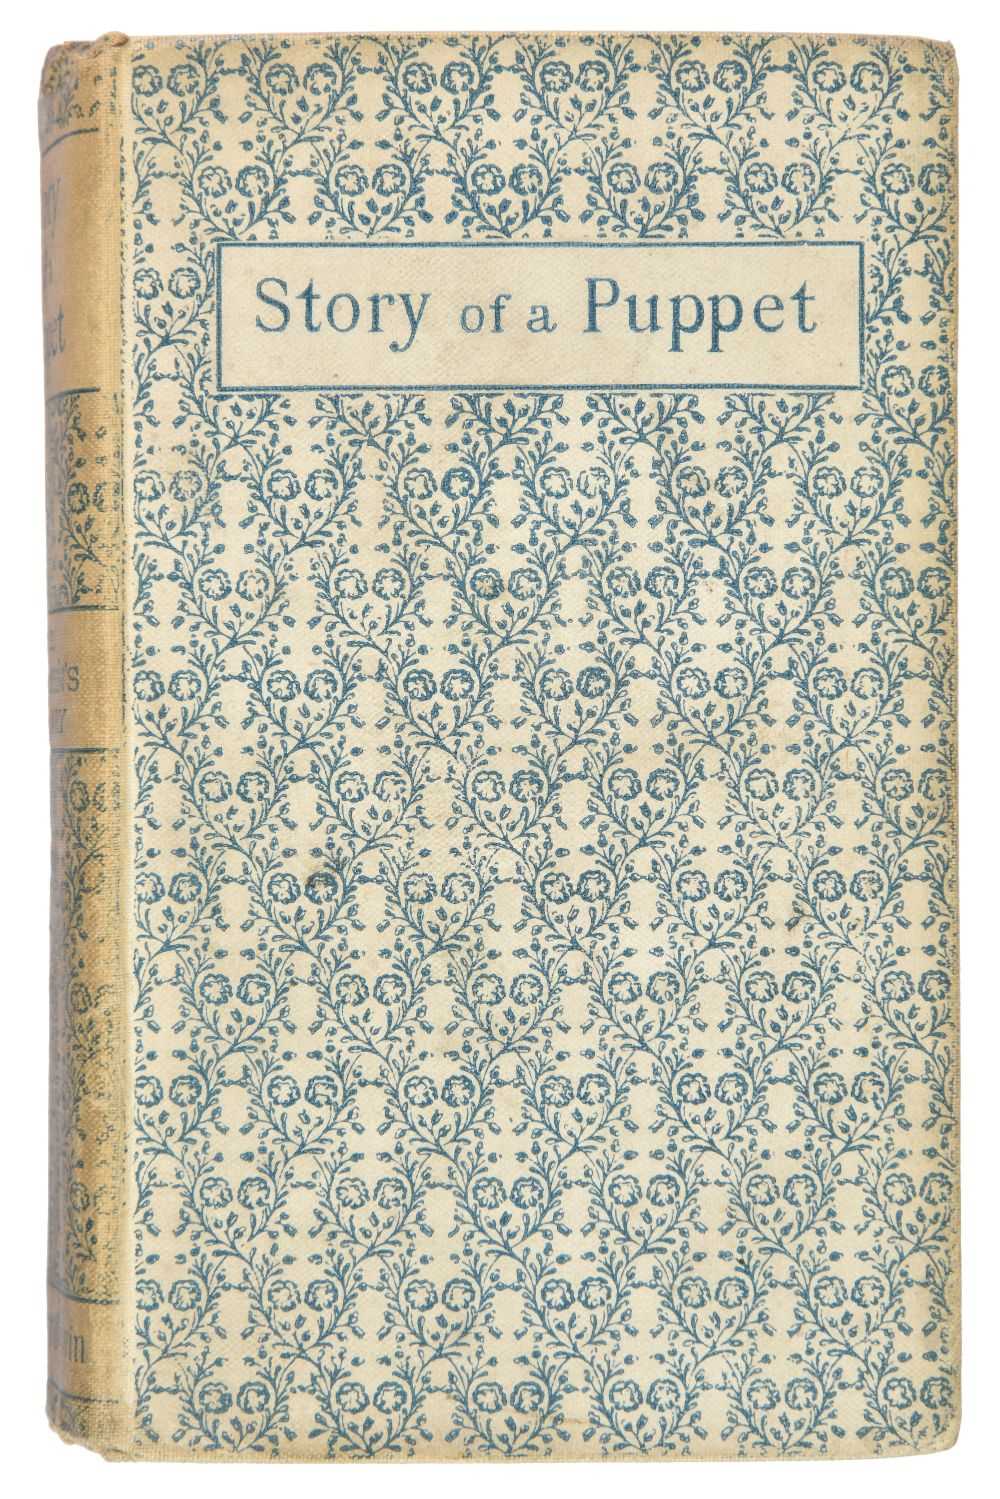 Lot 490 - Collodi (Carlo, pseudonym of Carlo Lorenzini). The Story of a Puppet, 1st English edition, 1892